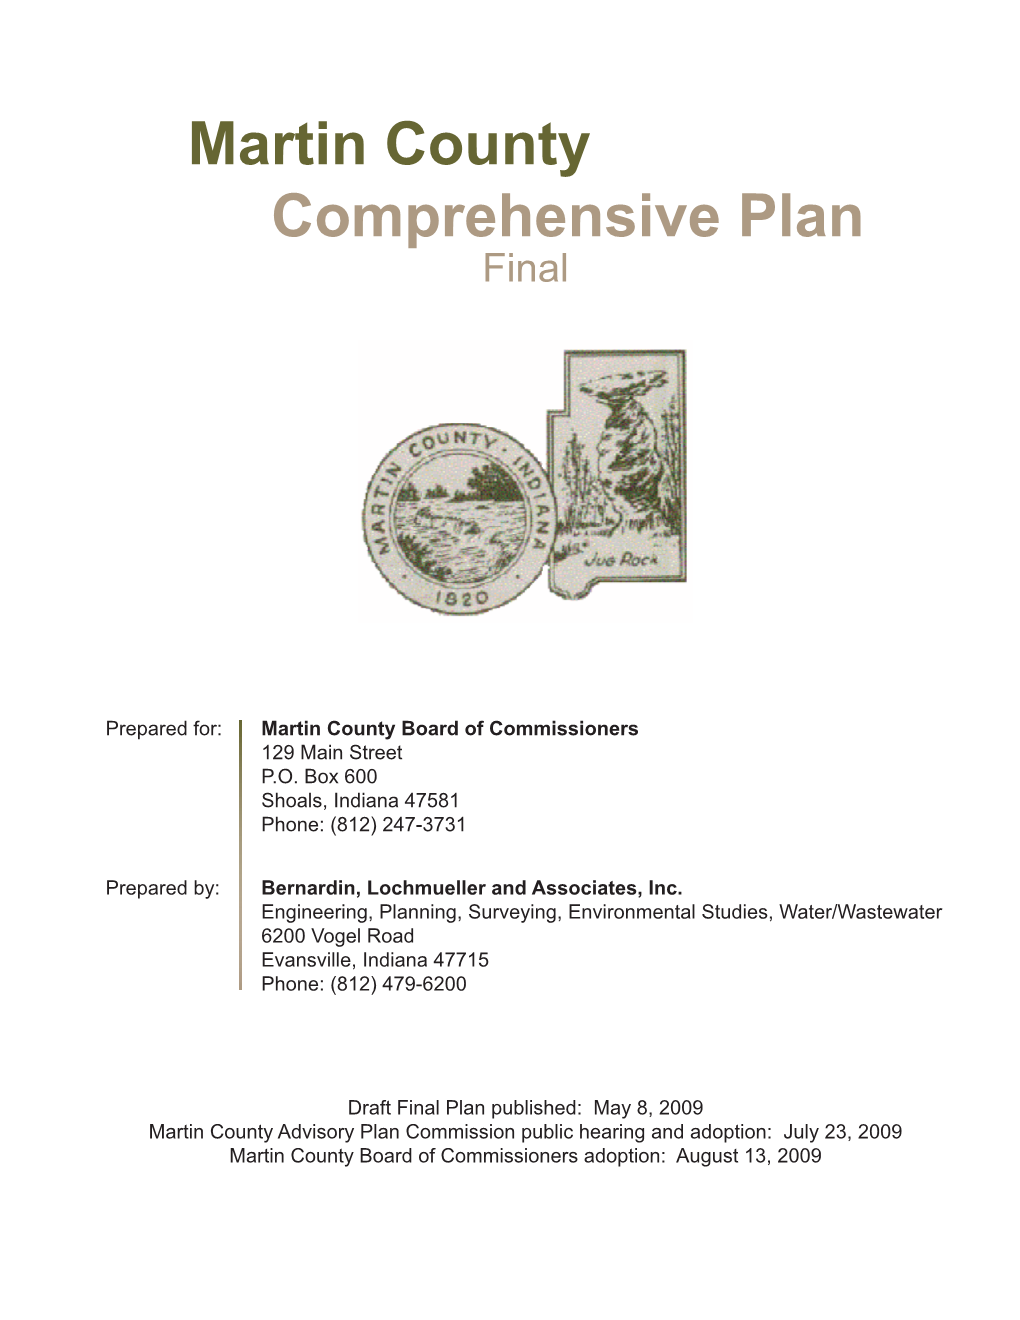 Martin County Comprehensive Plan Final